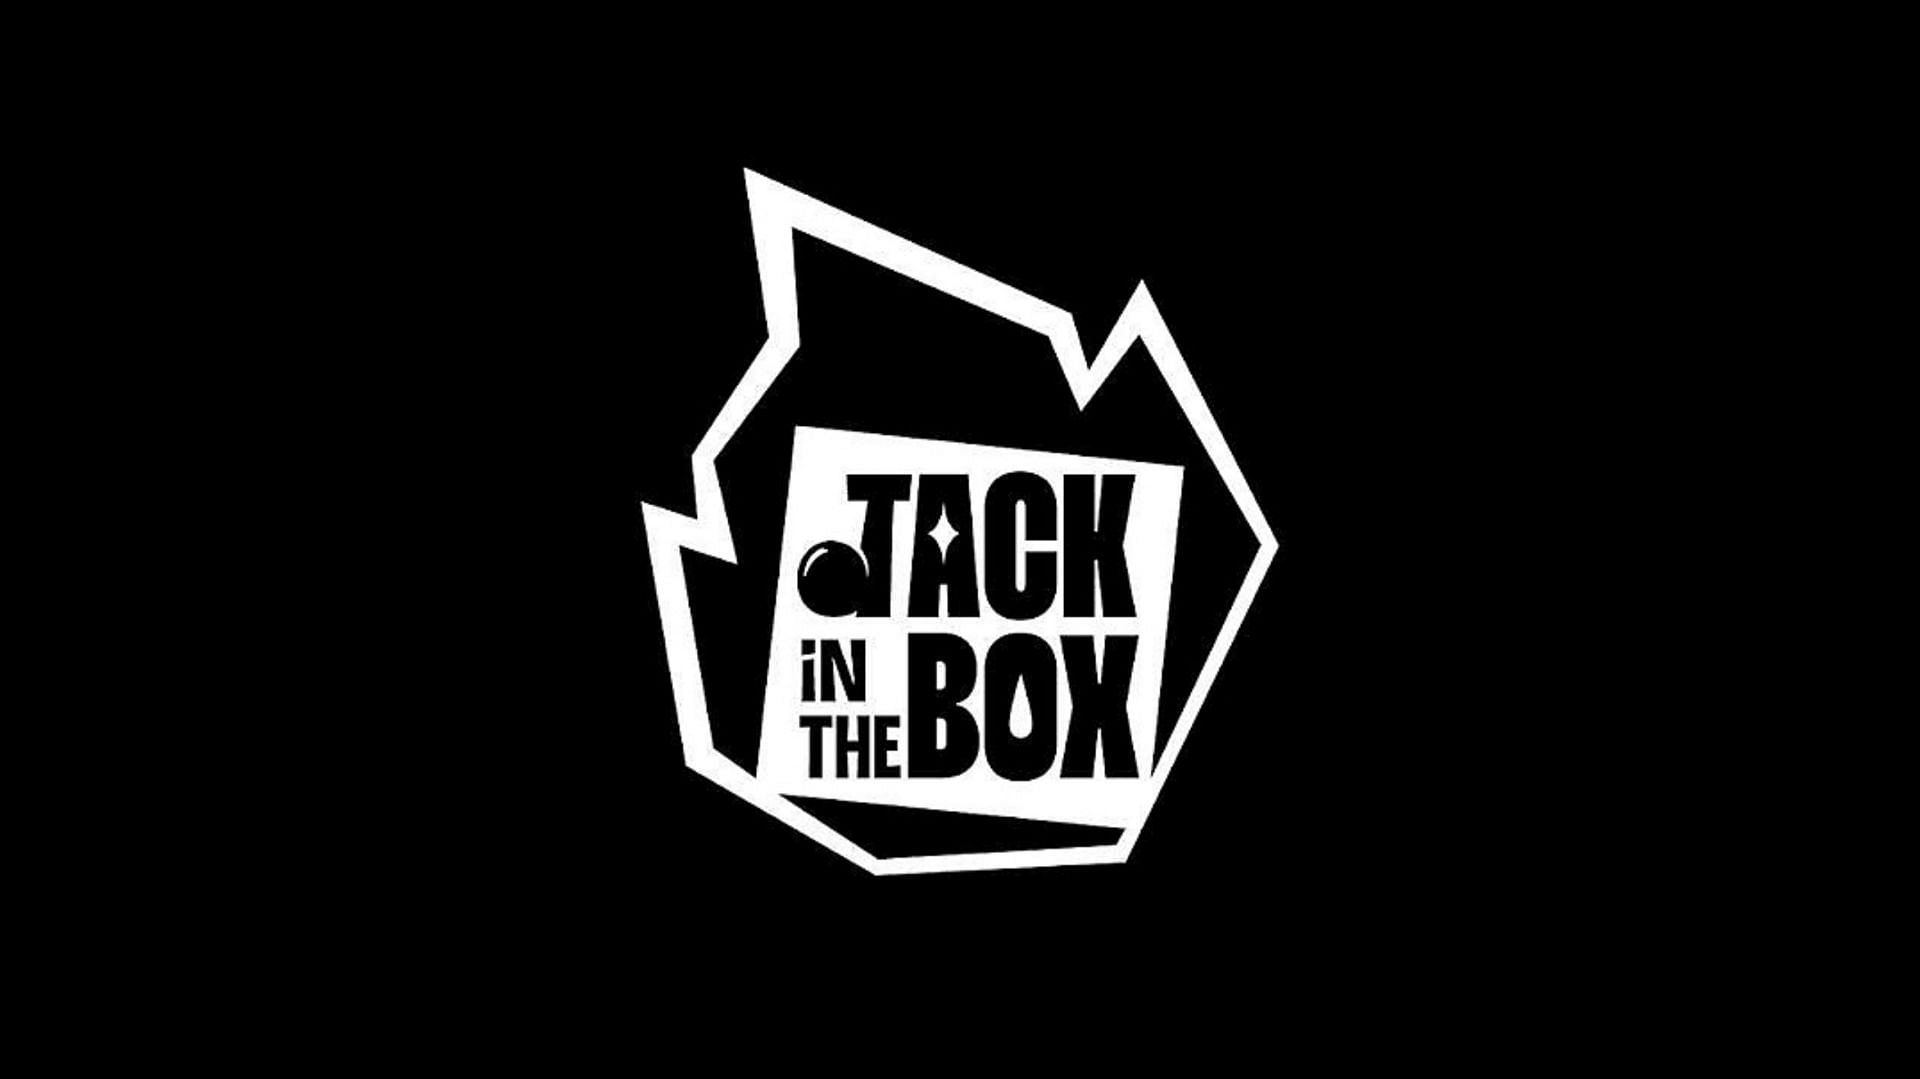 BIGHIT MUSIC - j-hope 'Jack In The Box' Teaser Photo 1st